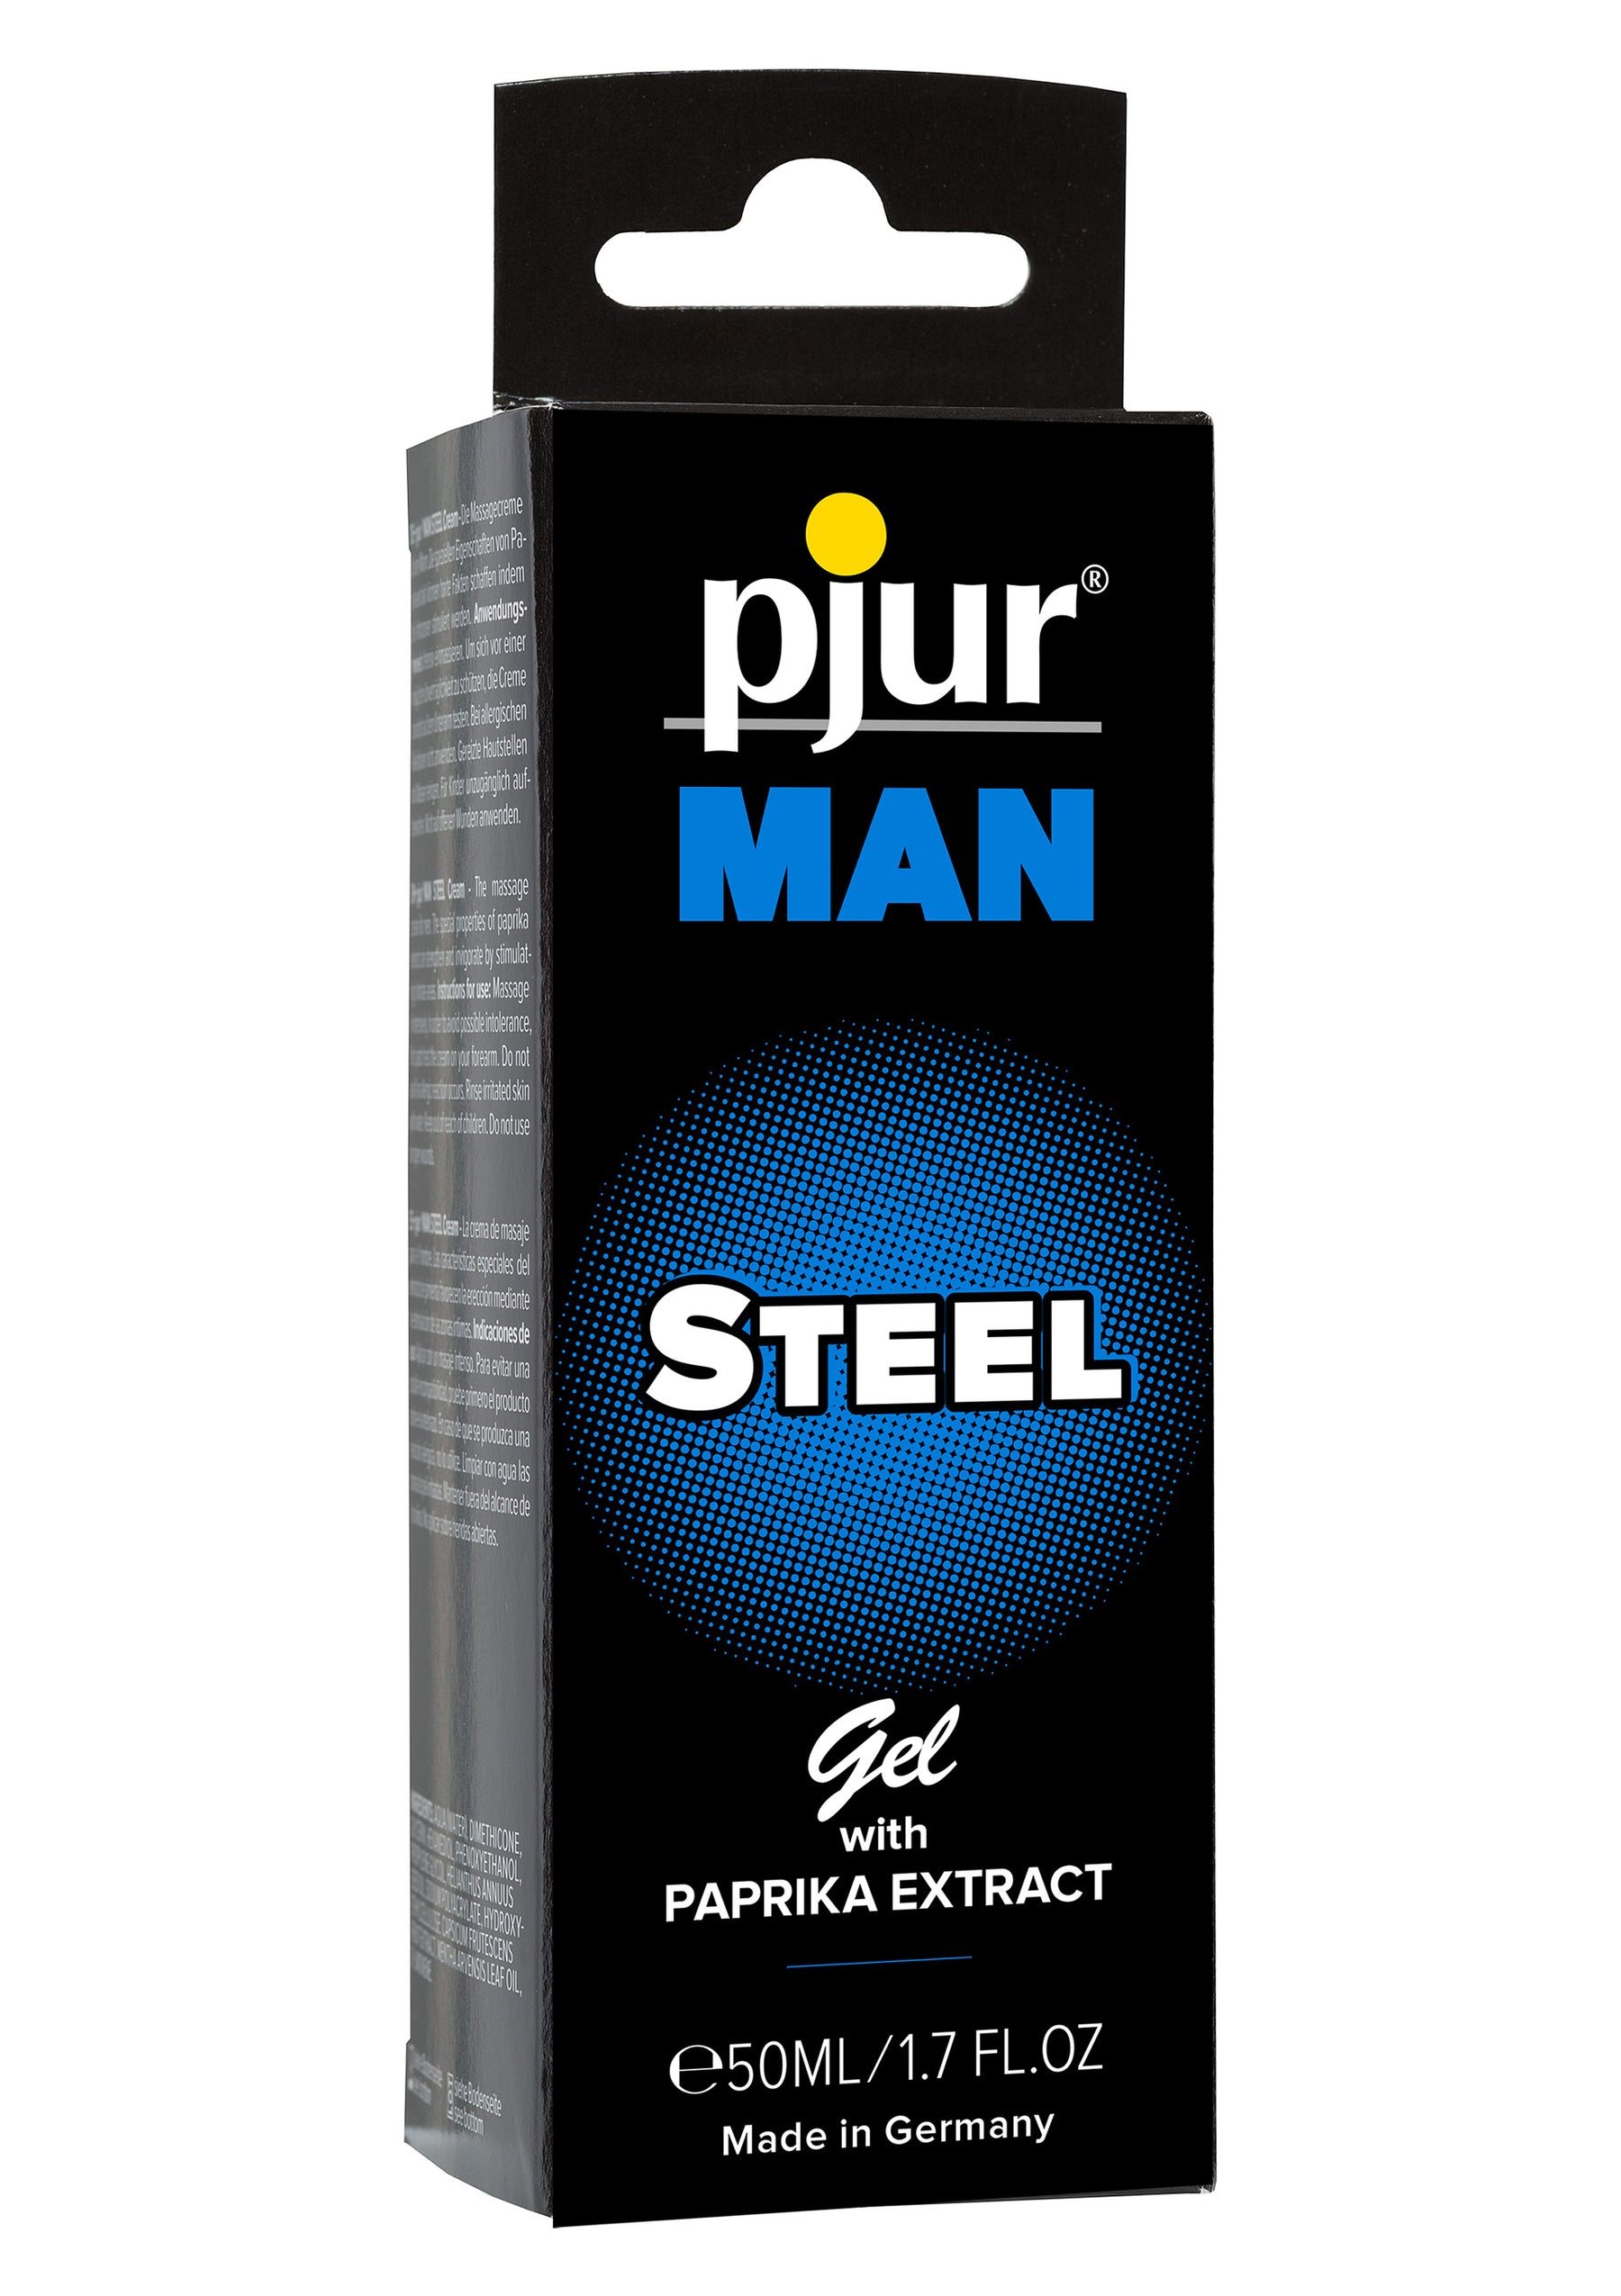 Pjur Man Steel Gel 50ml-erotic-world-munchen.myshopify.com